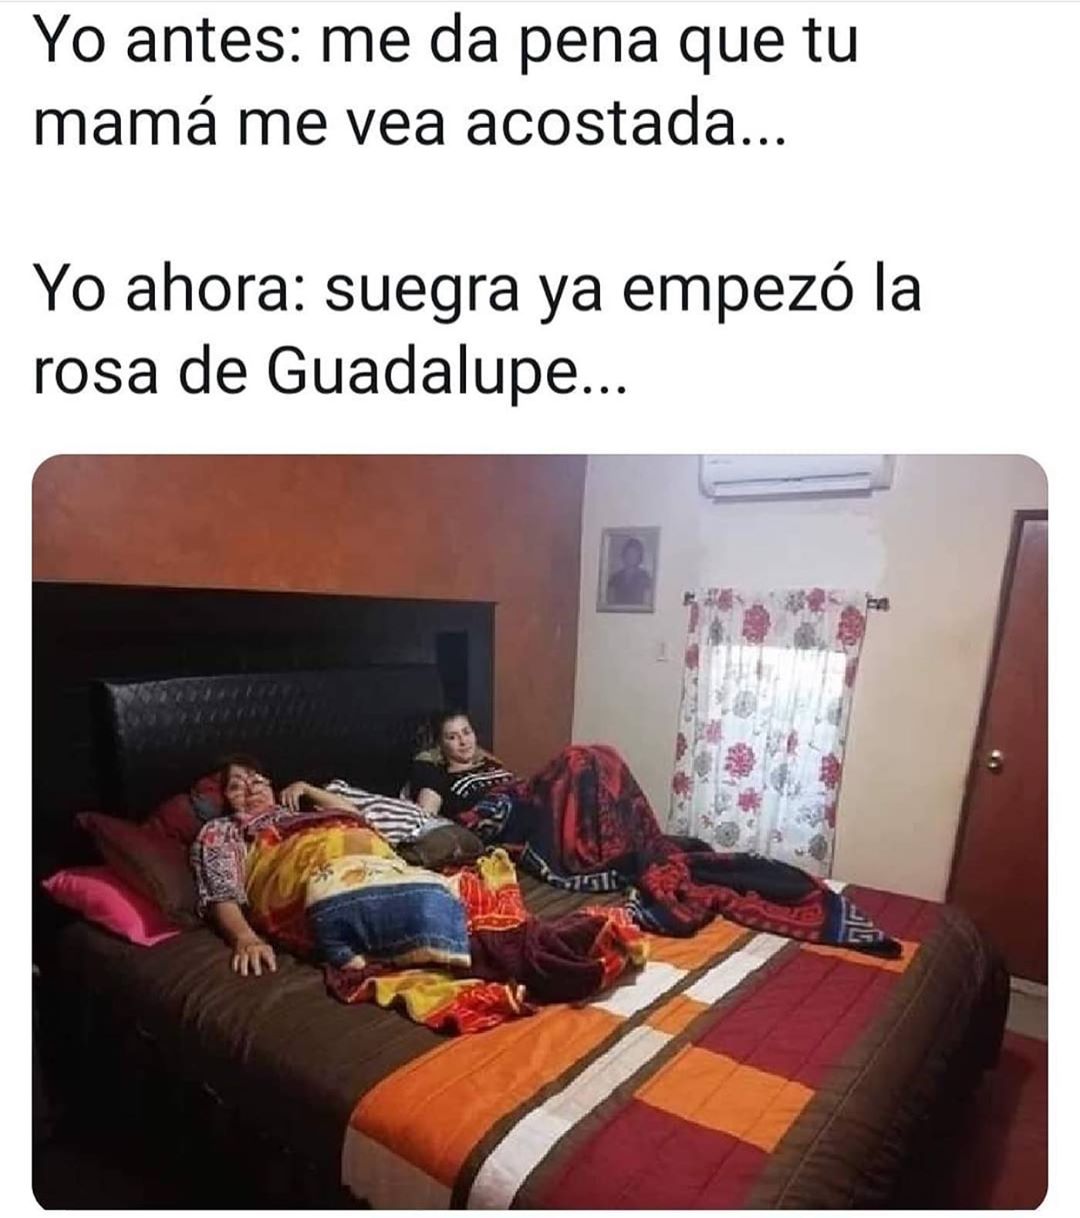 Yo antes: me da pena que tu mamá me vea acostada...  Yo ahora: suegra ya empezó la rosa de Guadalupe...